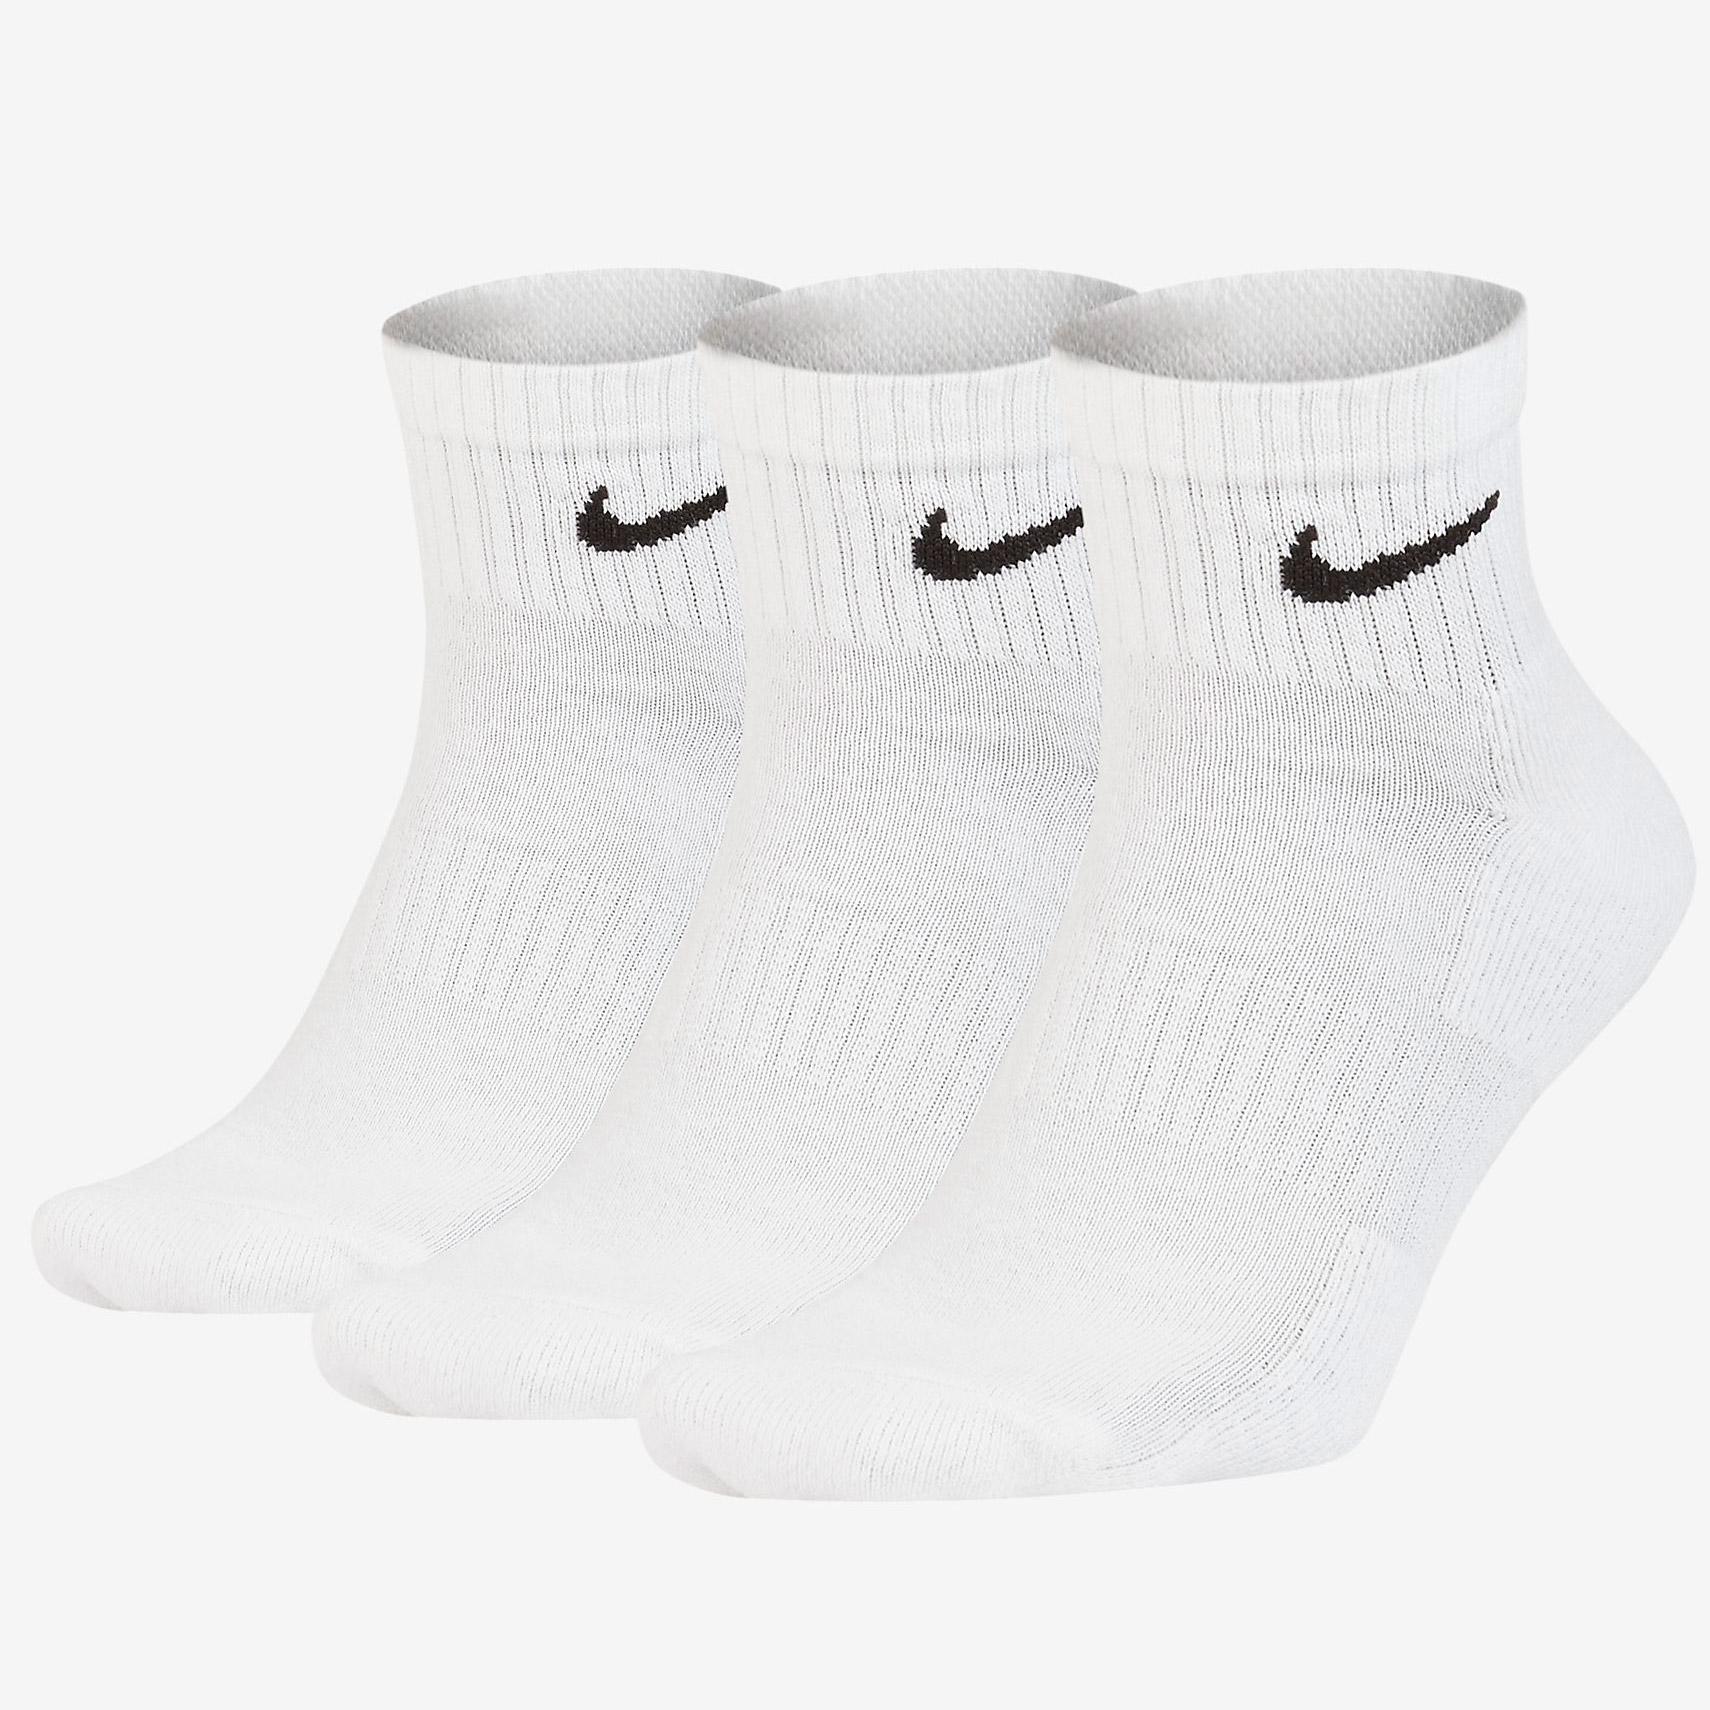 Nike Everyday Training Sock (3 Pairs) - White/Black - Tennisnuts.com